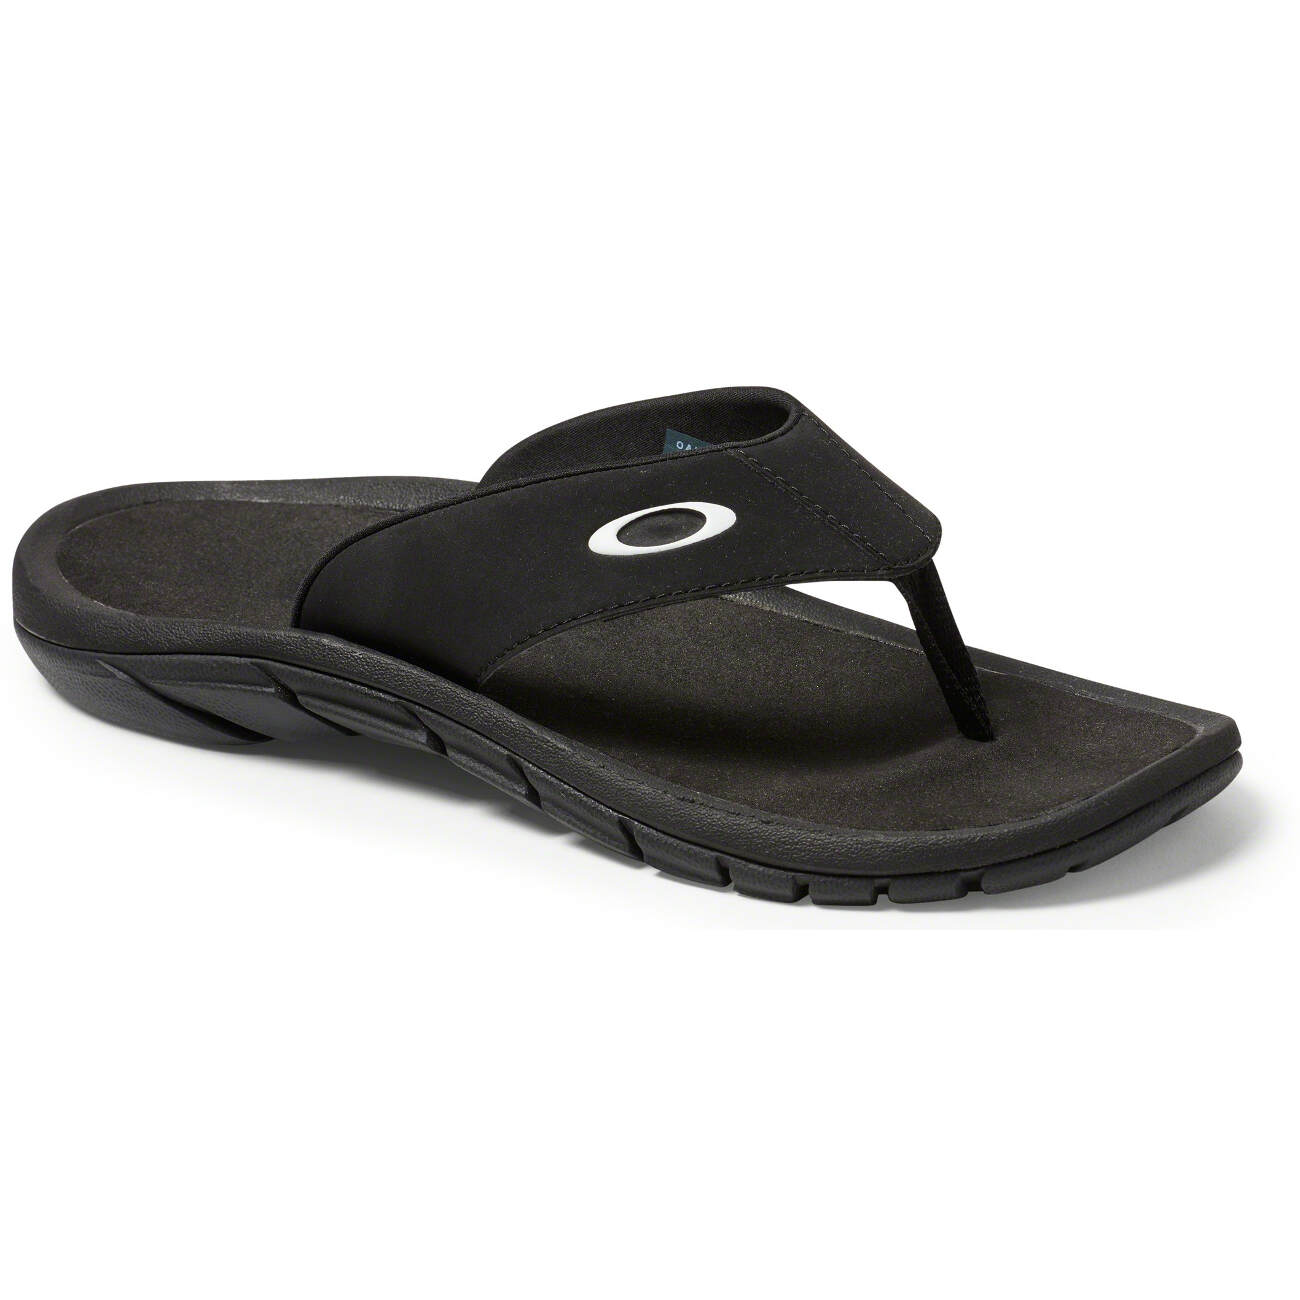 Oakley Beach Sandals Super Coil 2.0 Blackout